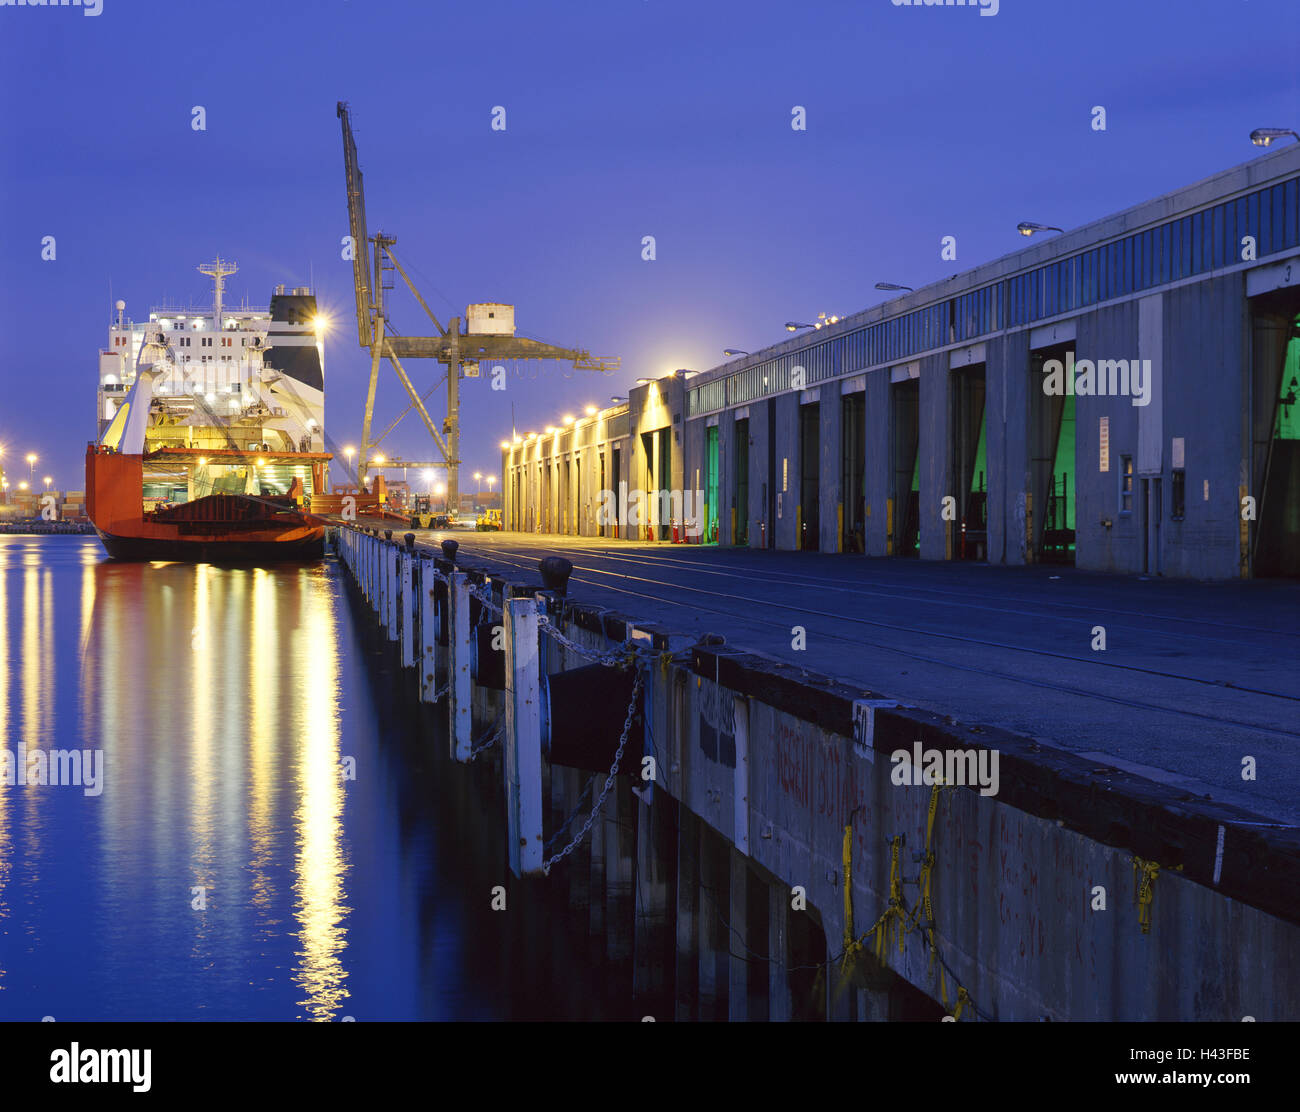 Cargo ship under crane in harbor at night Stock Photo